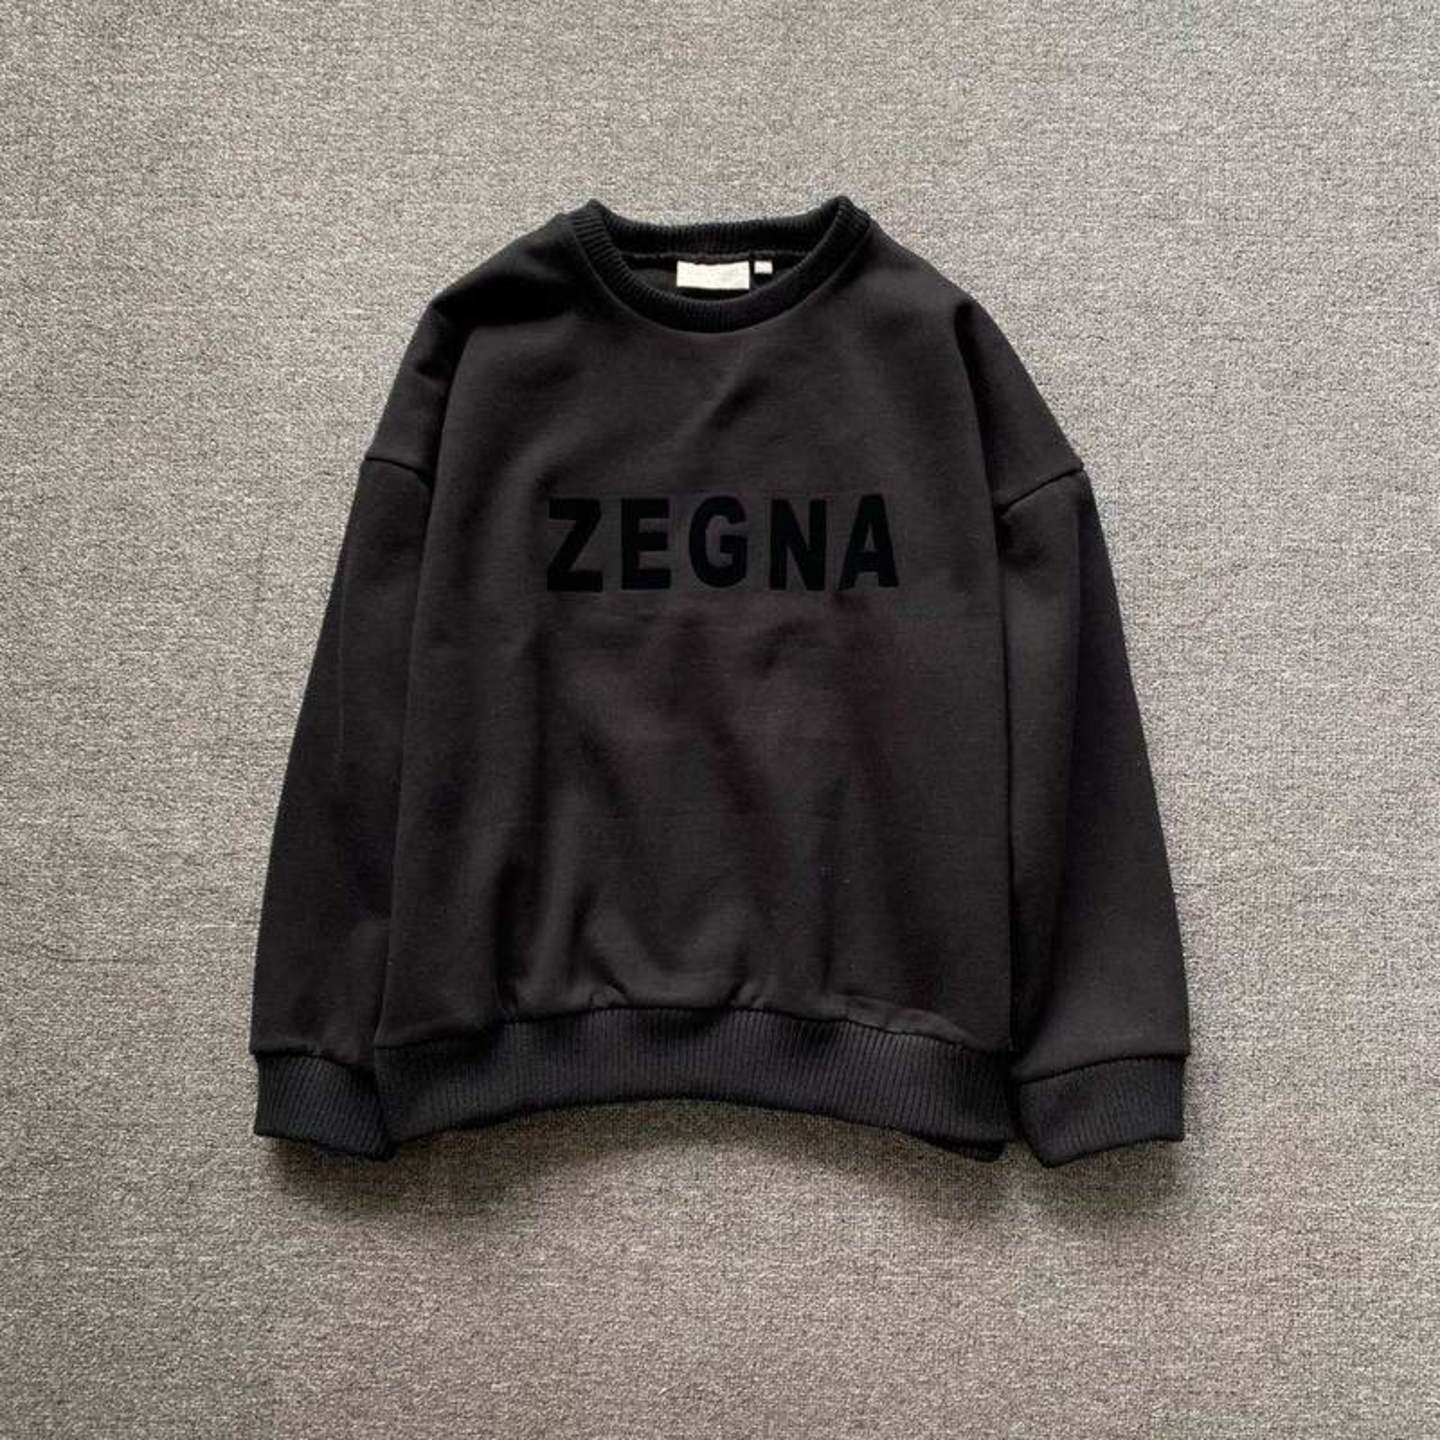 Fear of God x Zegna Oversized Logo Sweatshirt